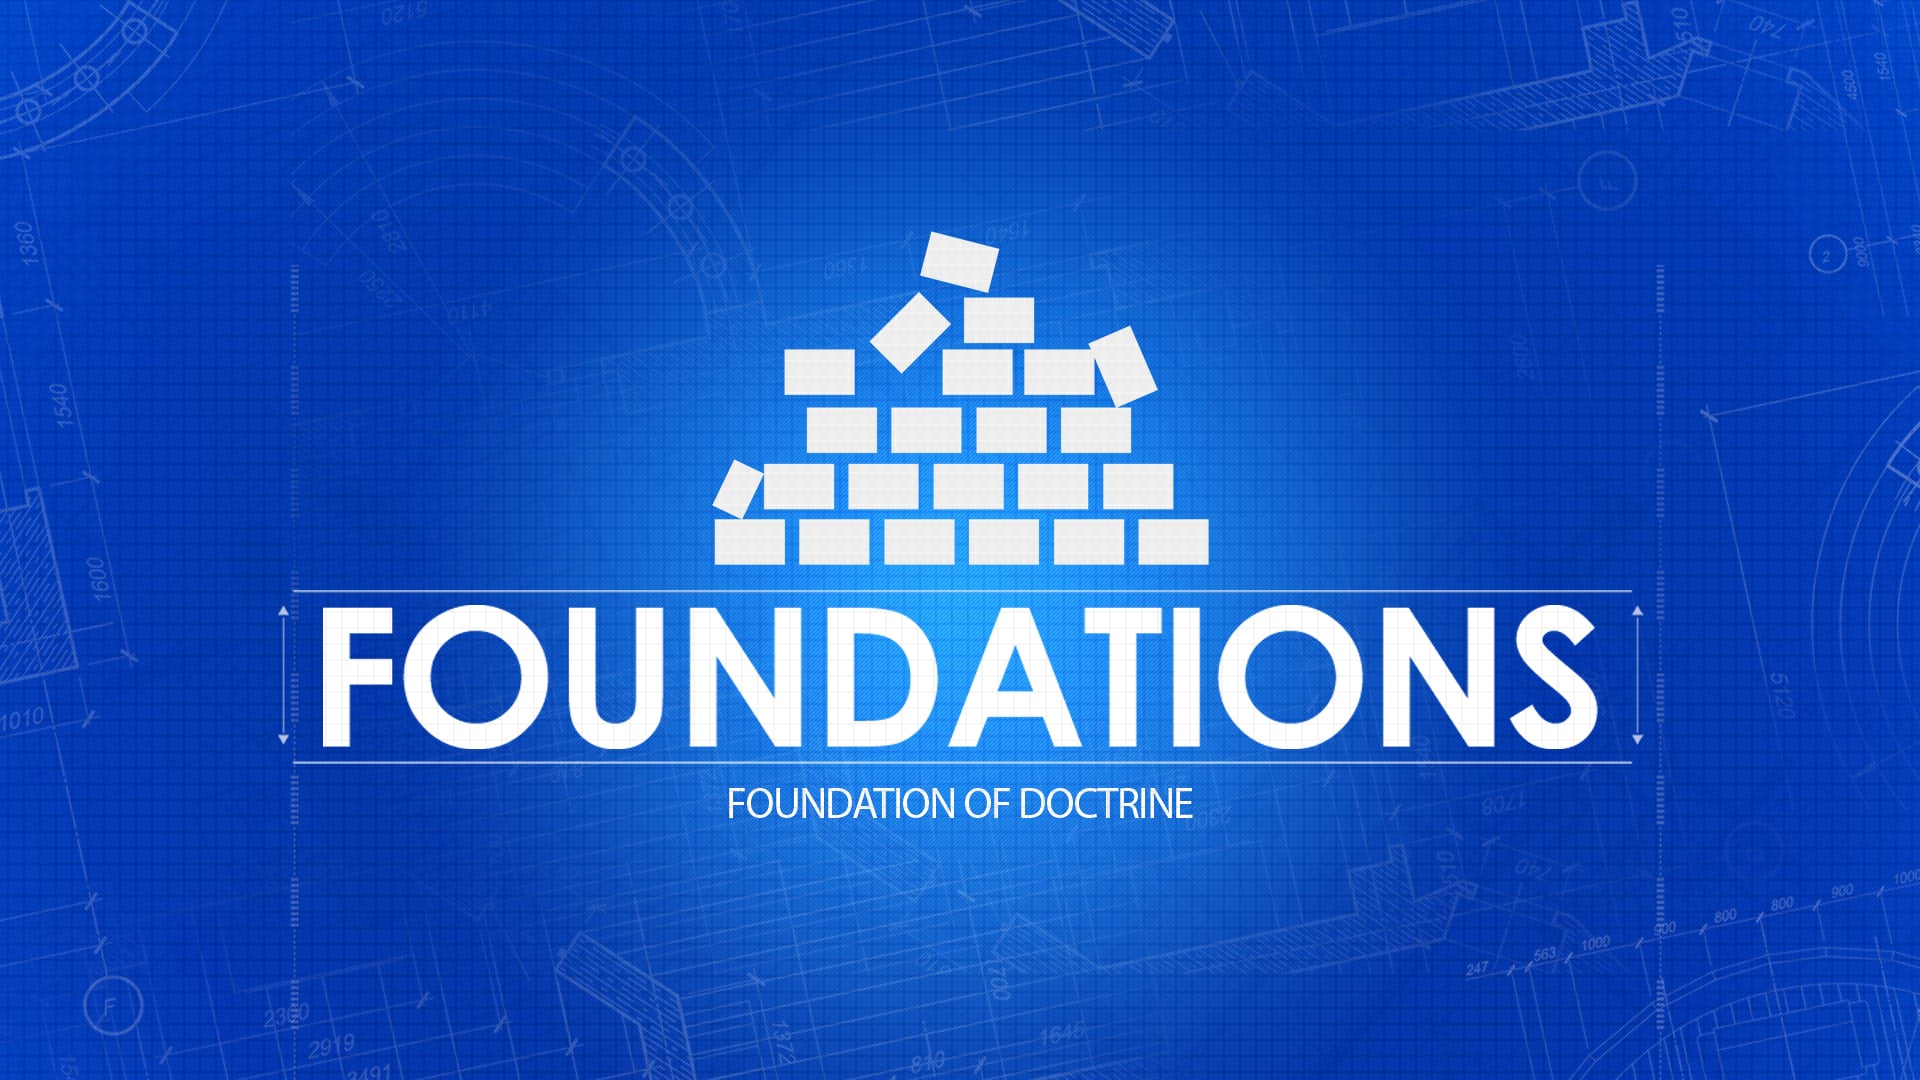 Foundations of Doctrine